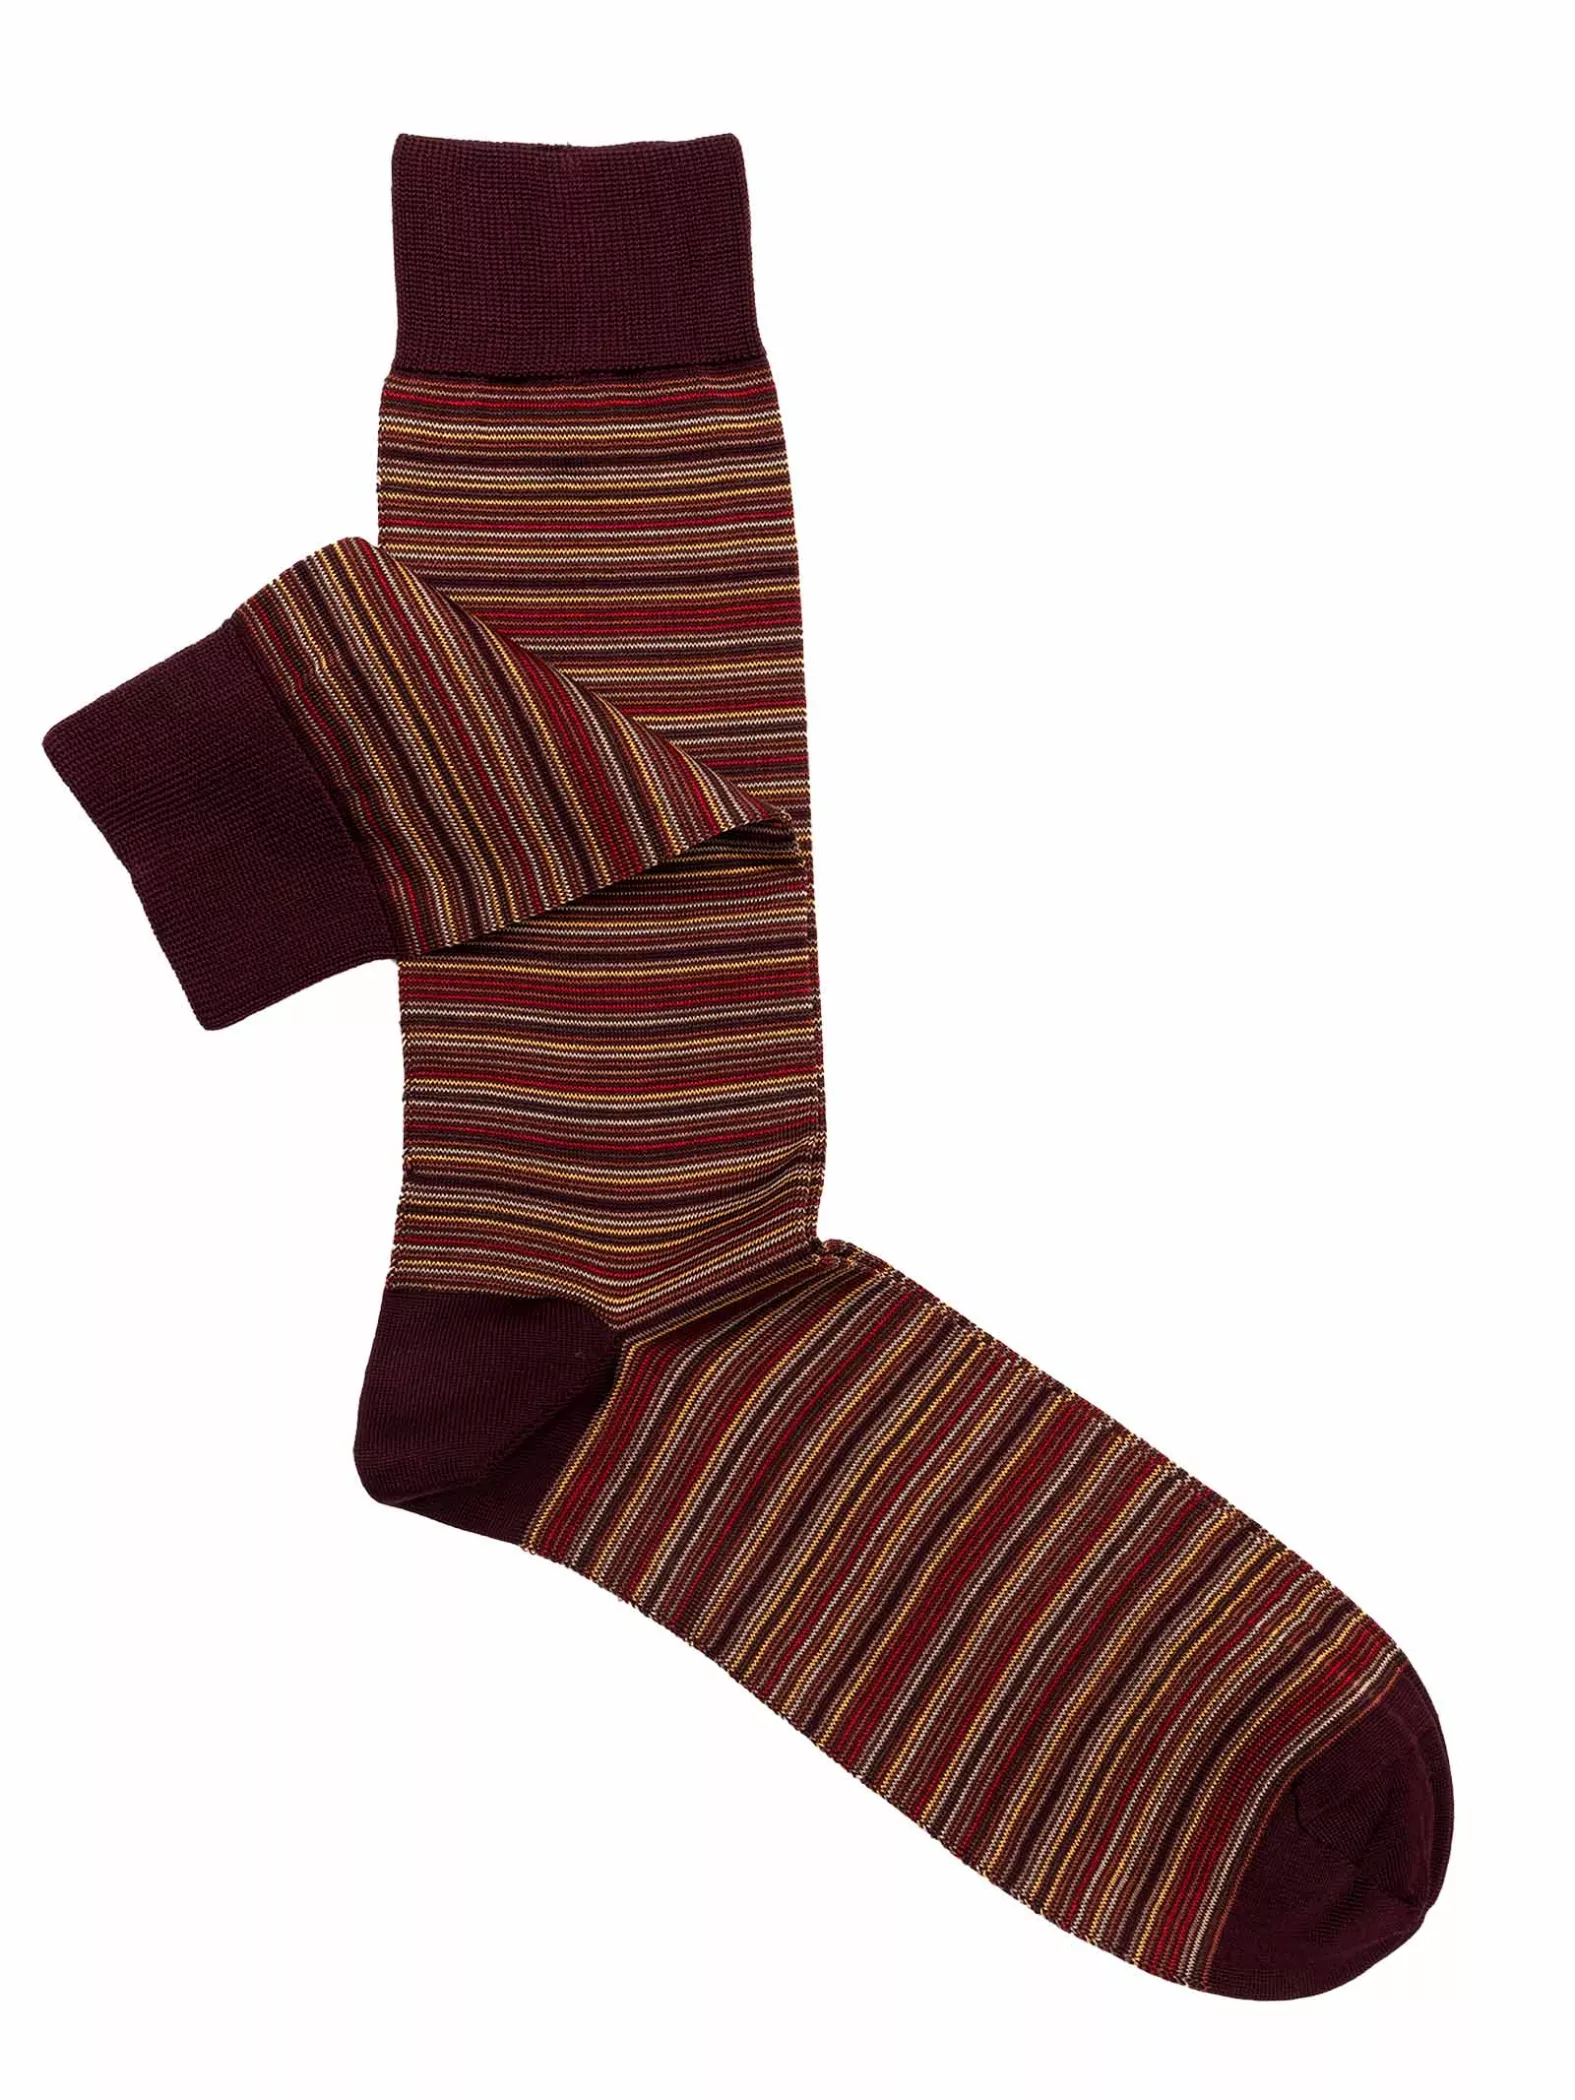 Miller striped patterned calf socks